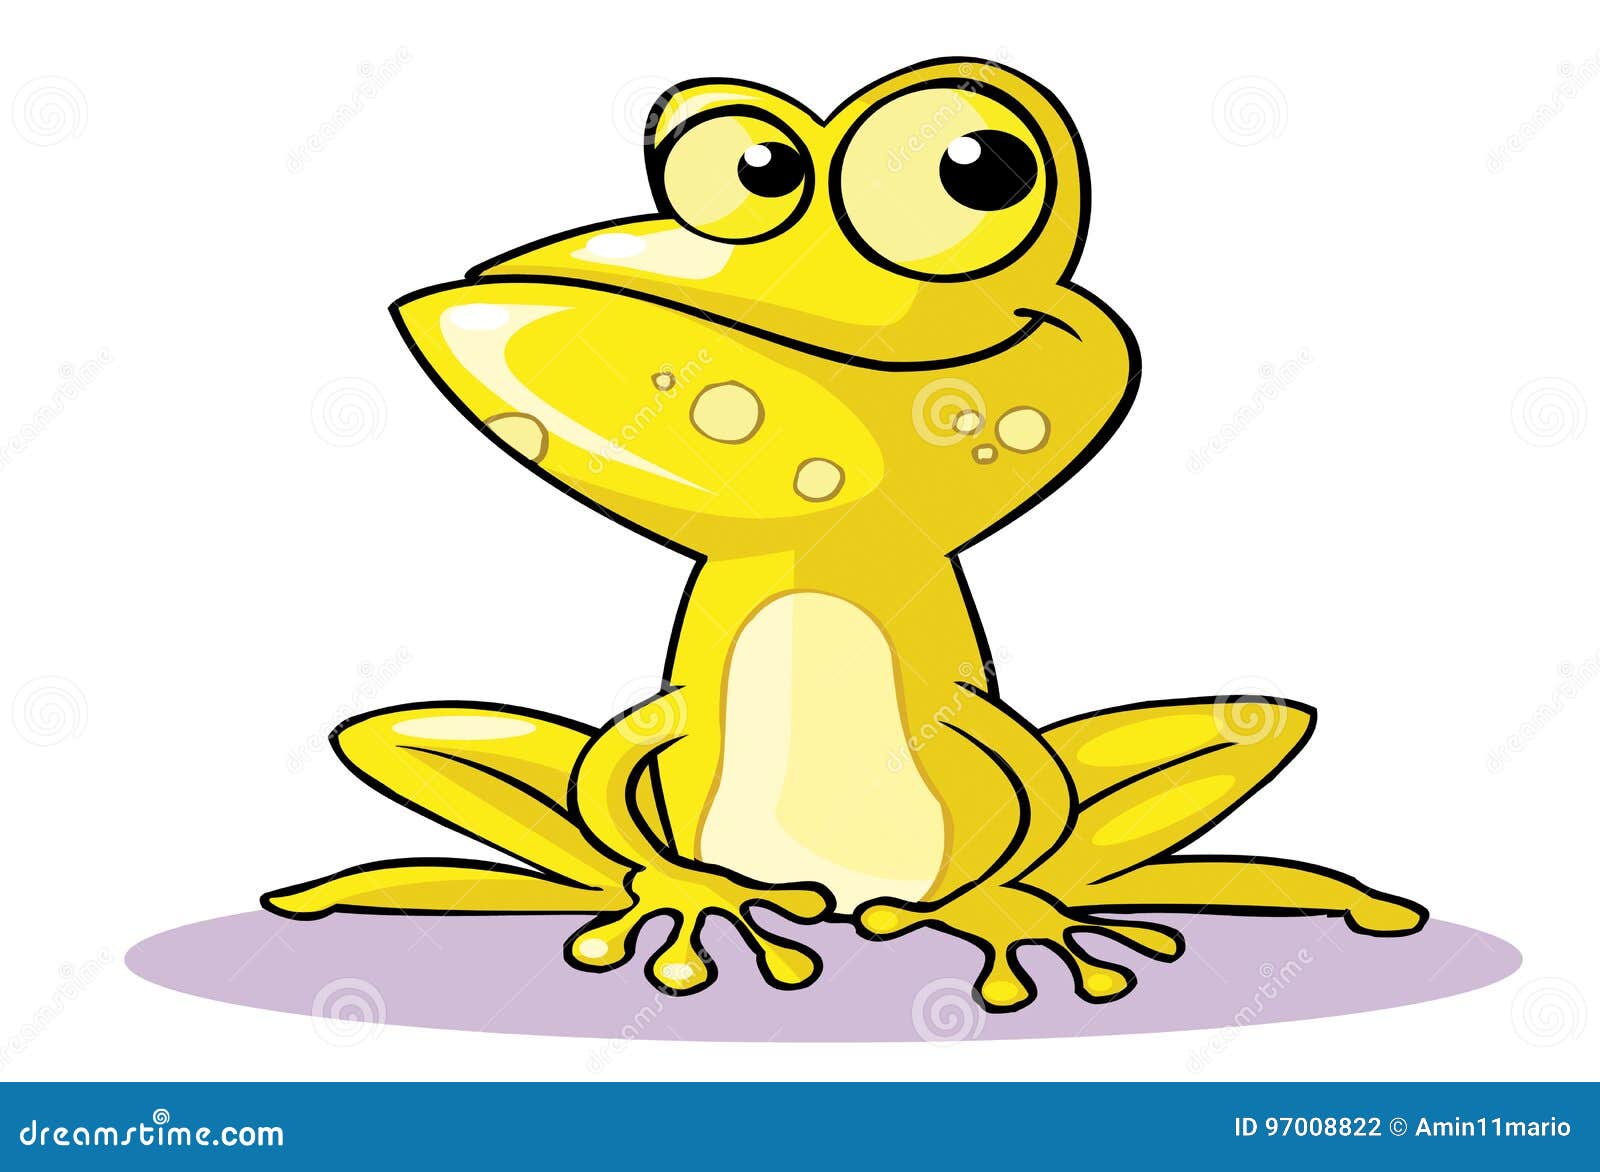 Yellow frog cartoon stock illustration. Illustration of carefree - 97008822